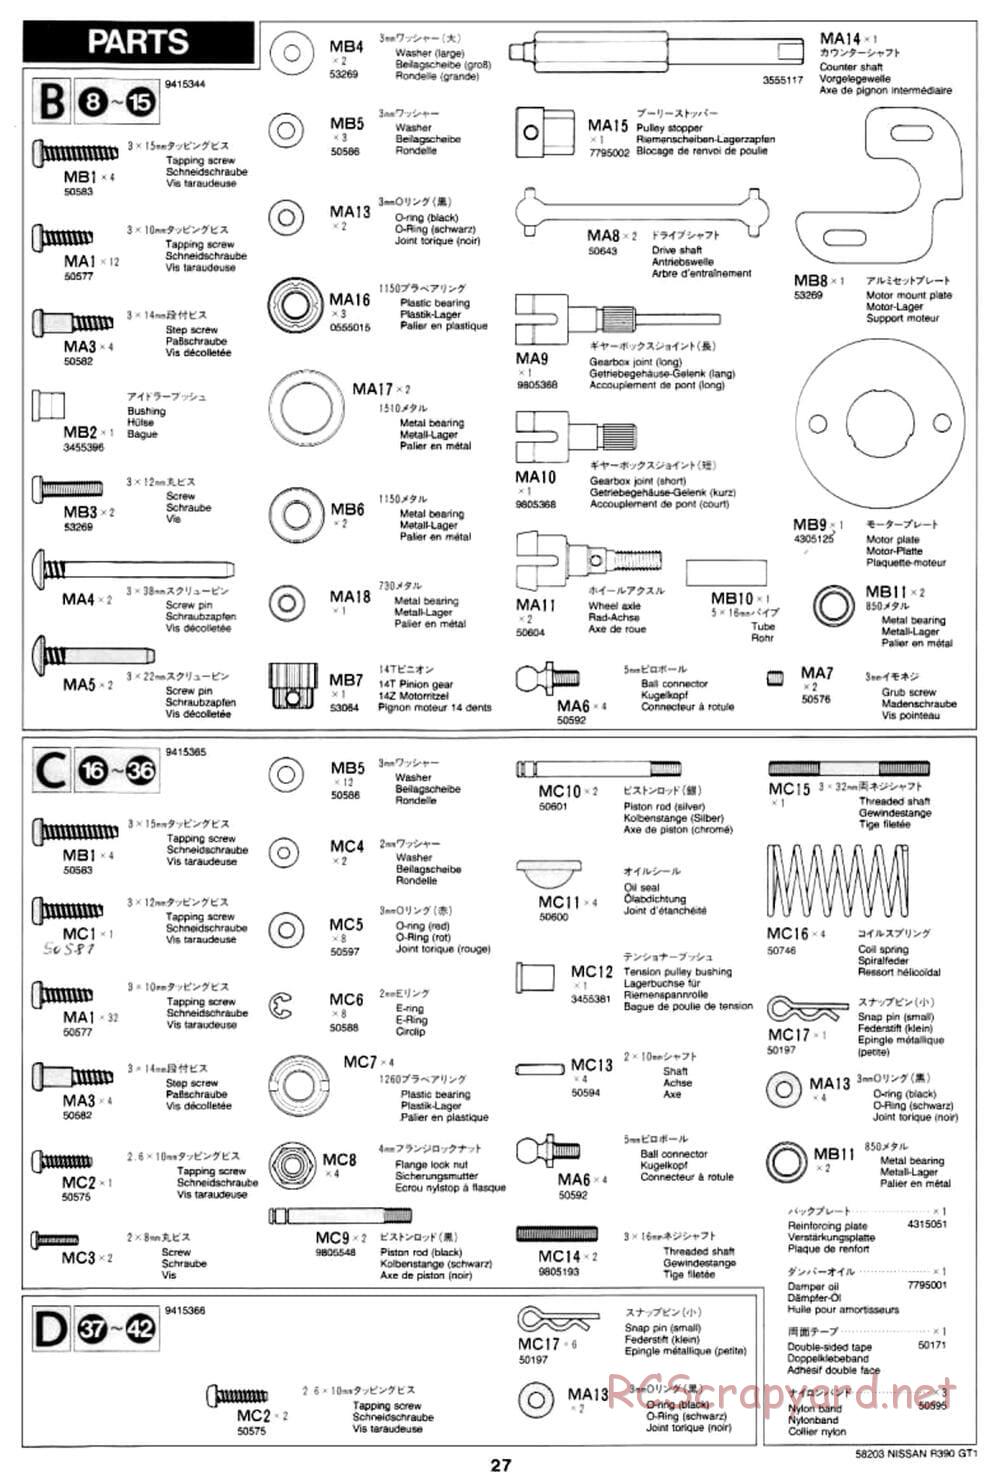 Tamiya - Nissan R390 GT1 - TA-03R Chassis - Manual - Page 27